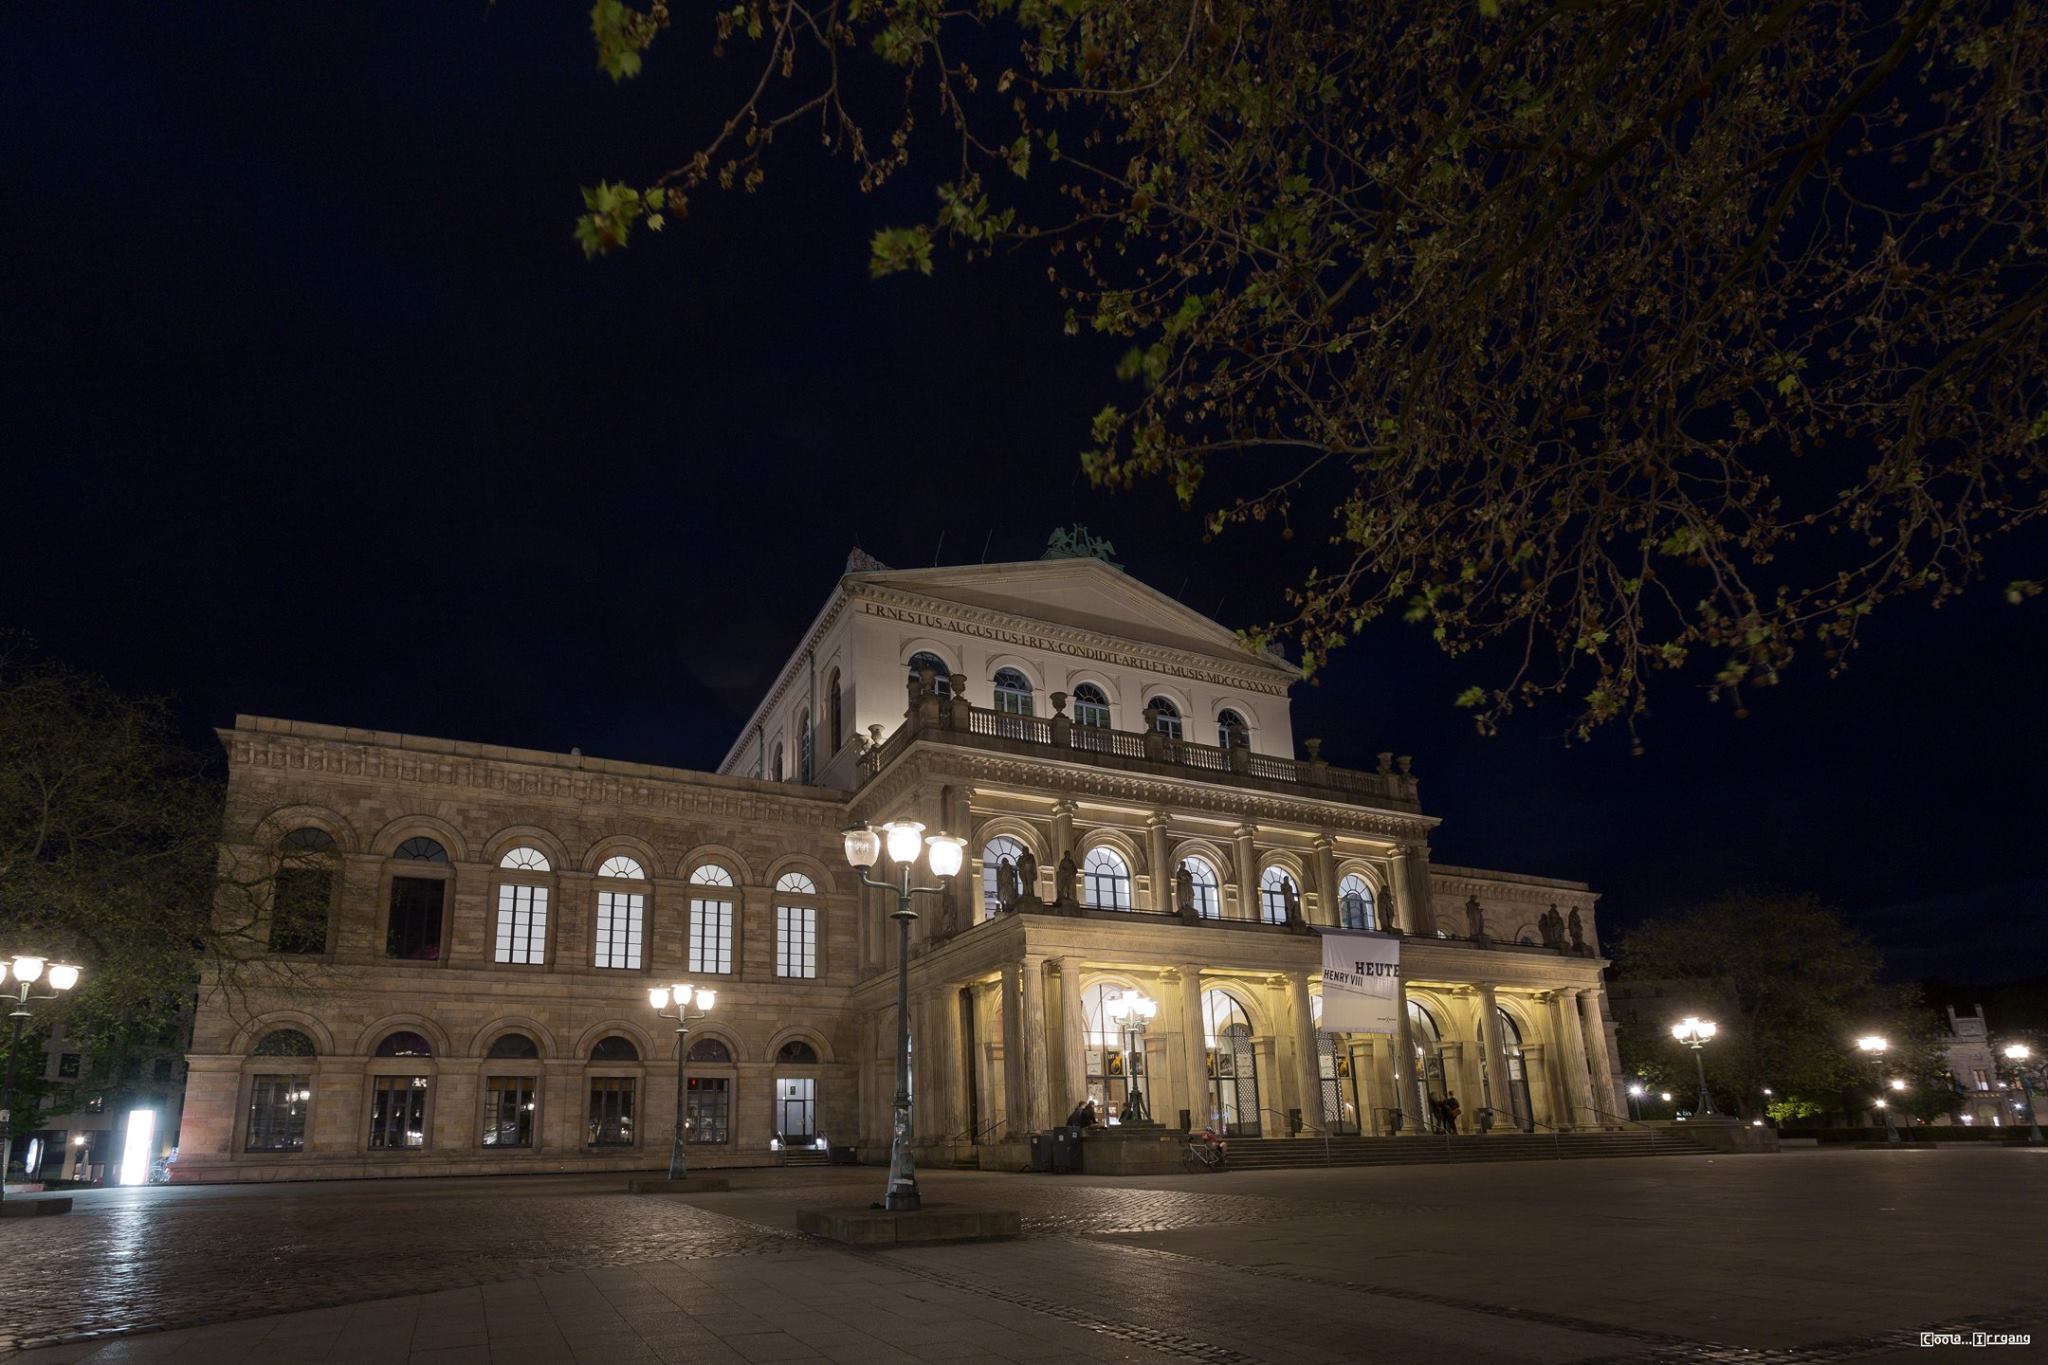 Staatstheater Hannover